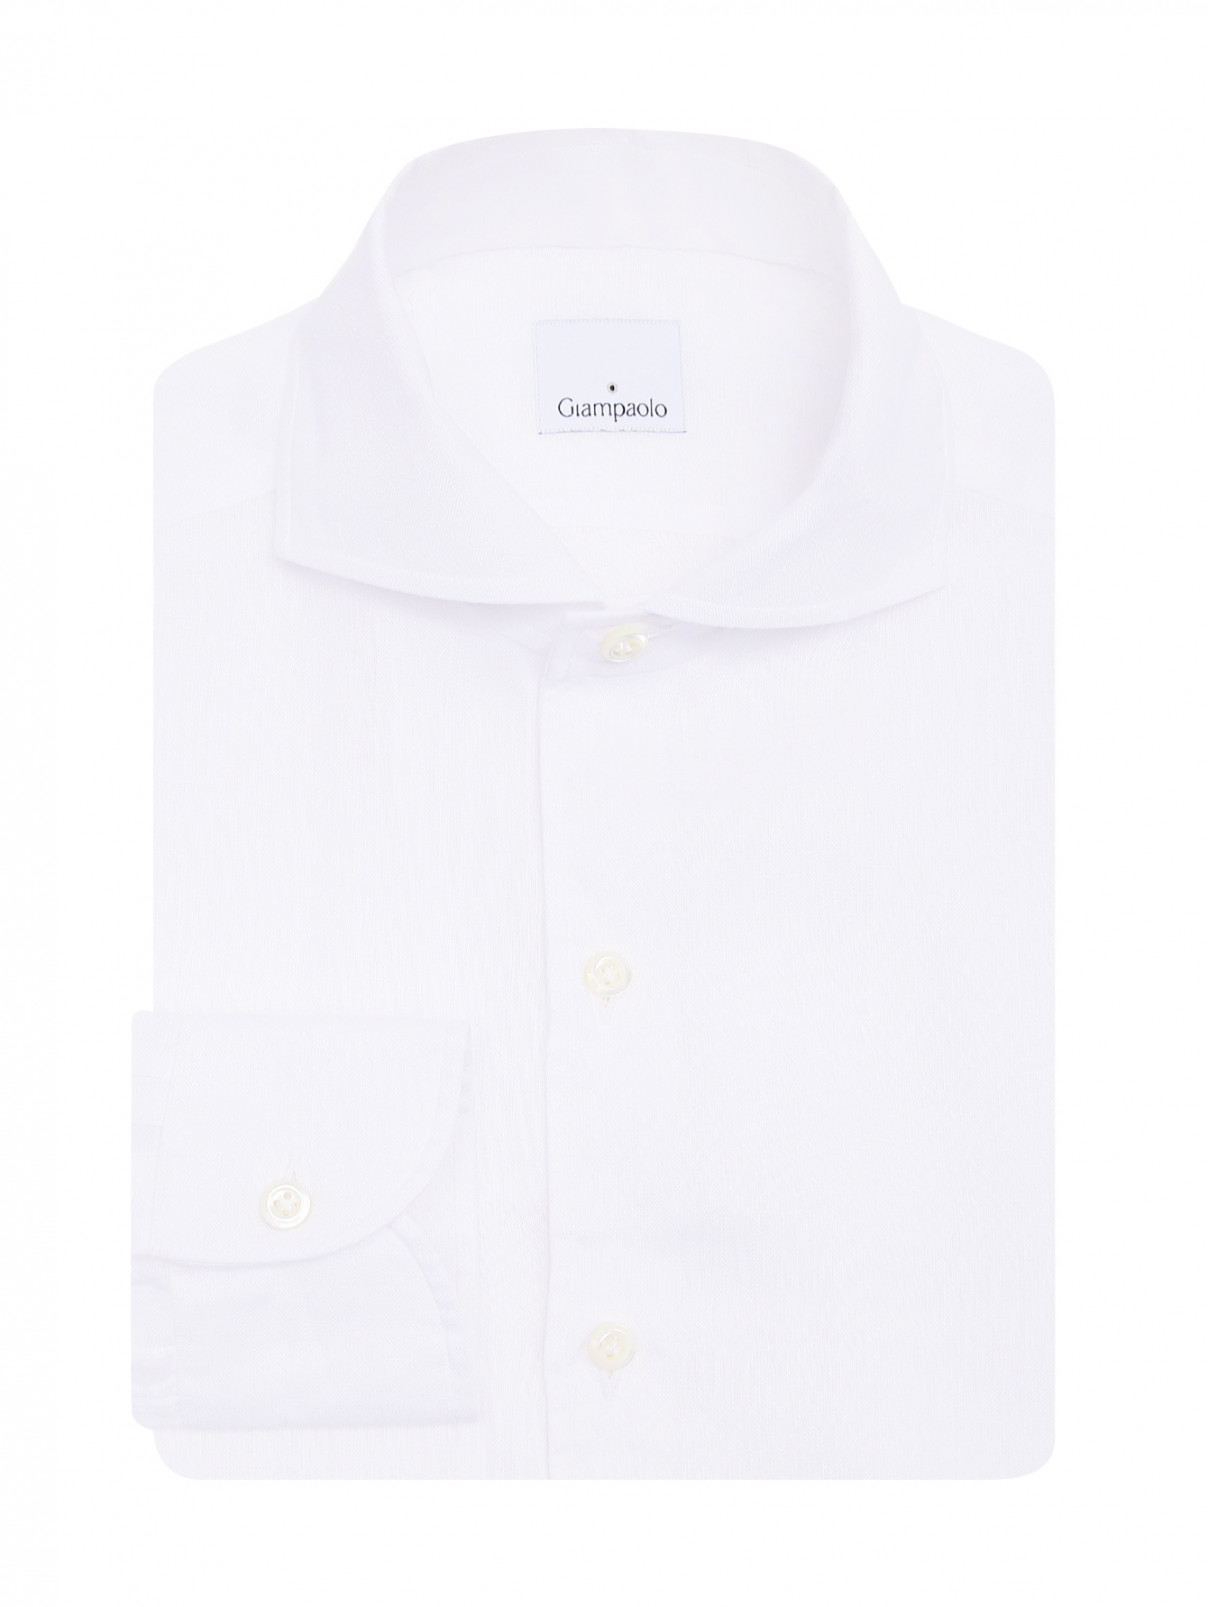 Рубашка изо льна на пуговицах Giampaolo  –  Общий вид  – Цвет:  Белый